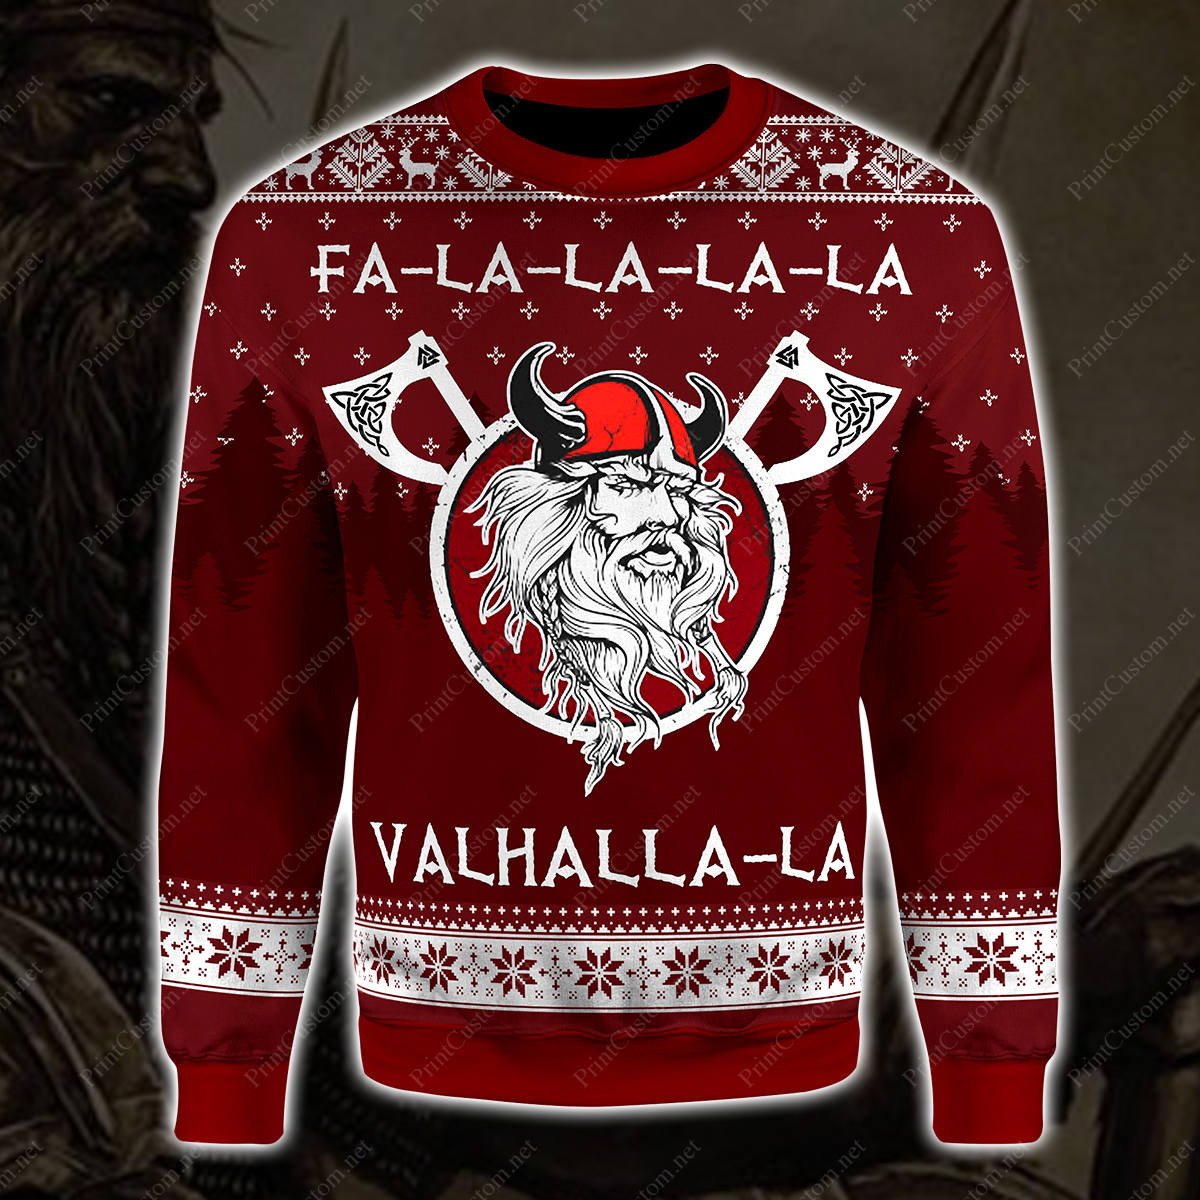 Fa-la-la-la-la valhalla-la viking ugly christmas sweater 3